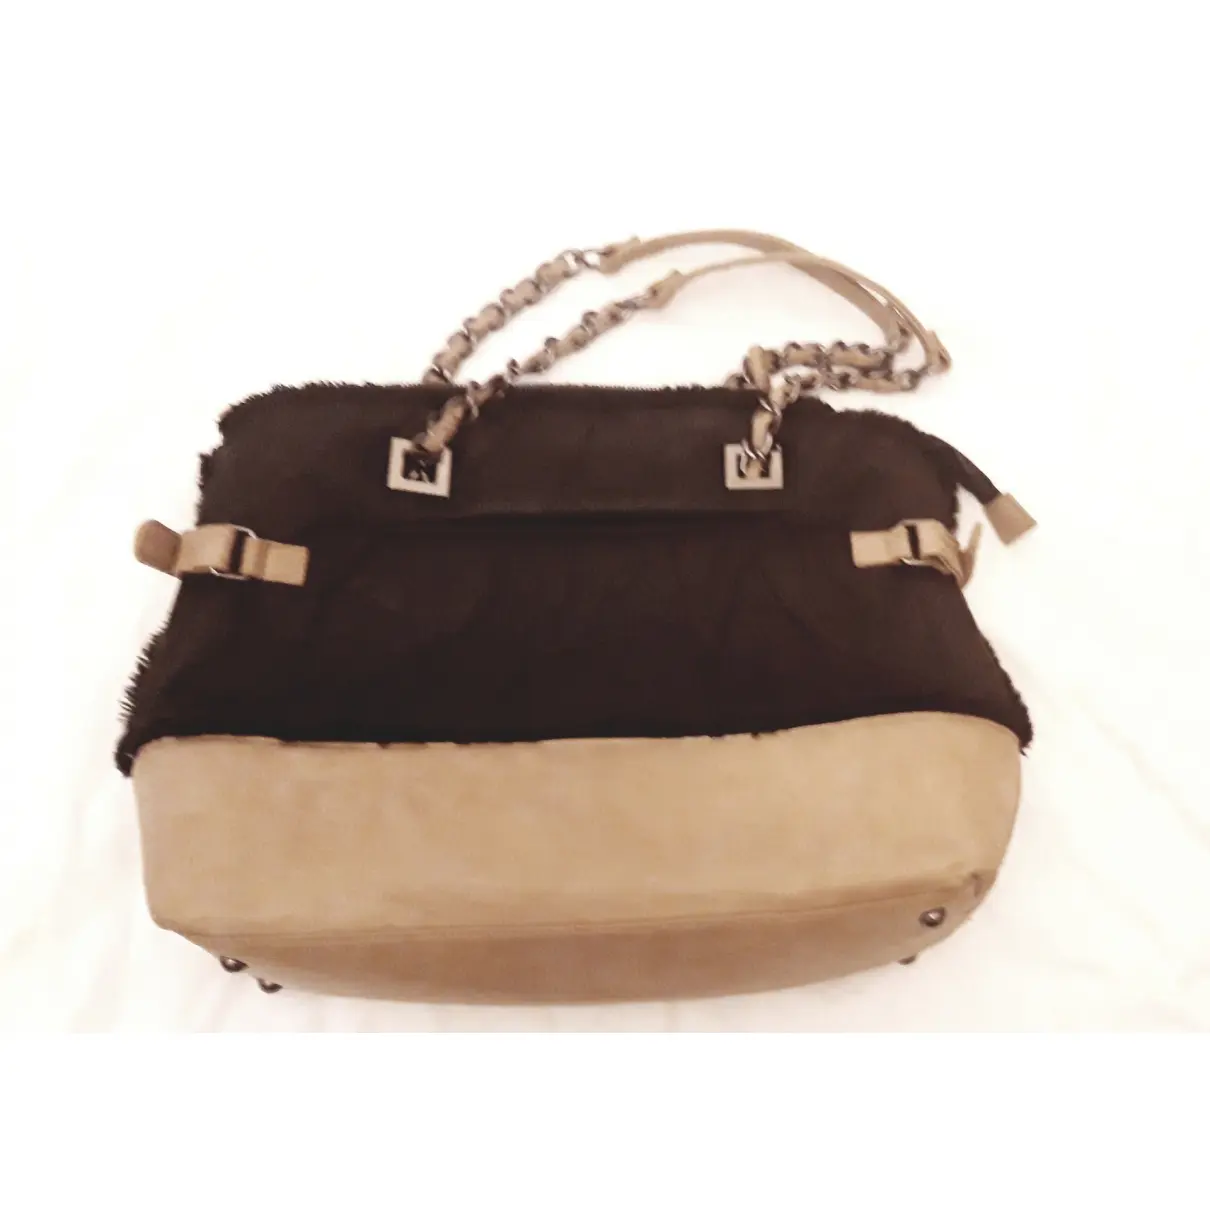 Buy Le Pandorine Vegan leather handbag online